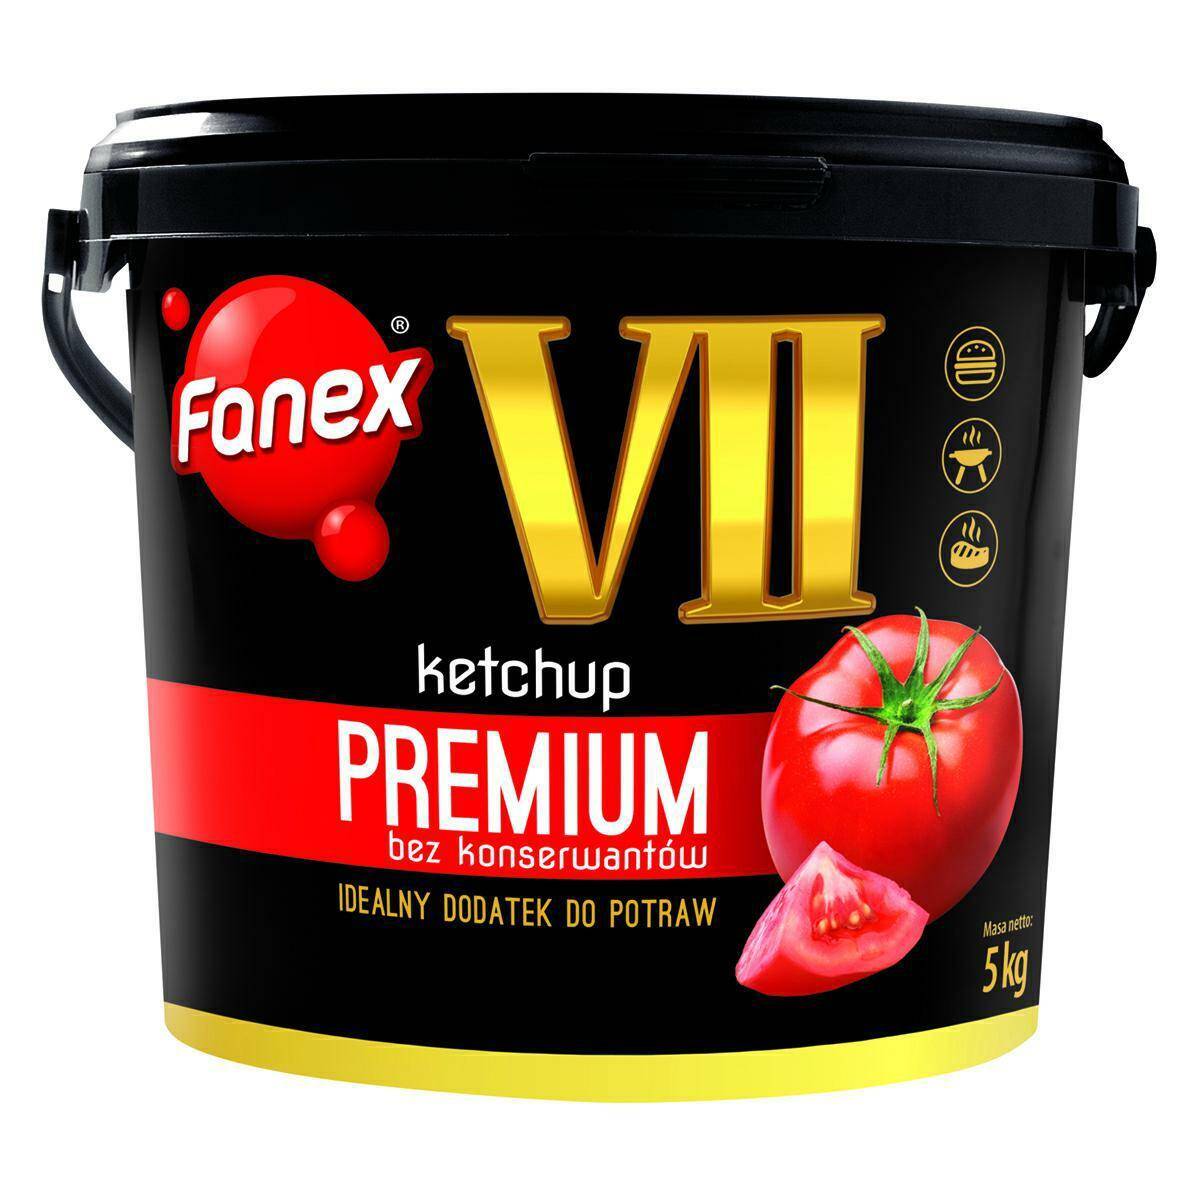 Fanex Ketchup VII Premium 5 kg